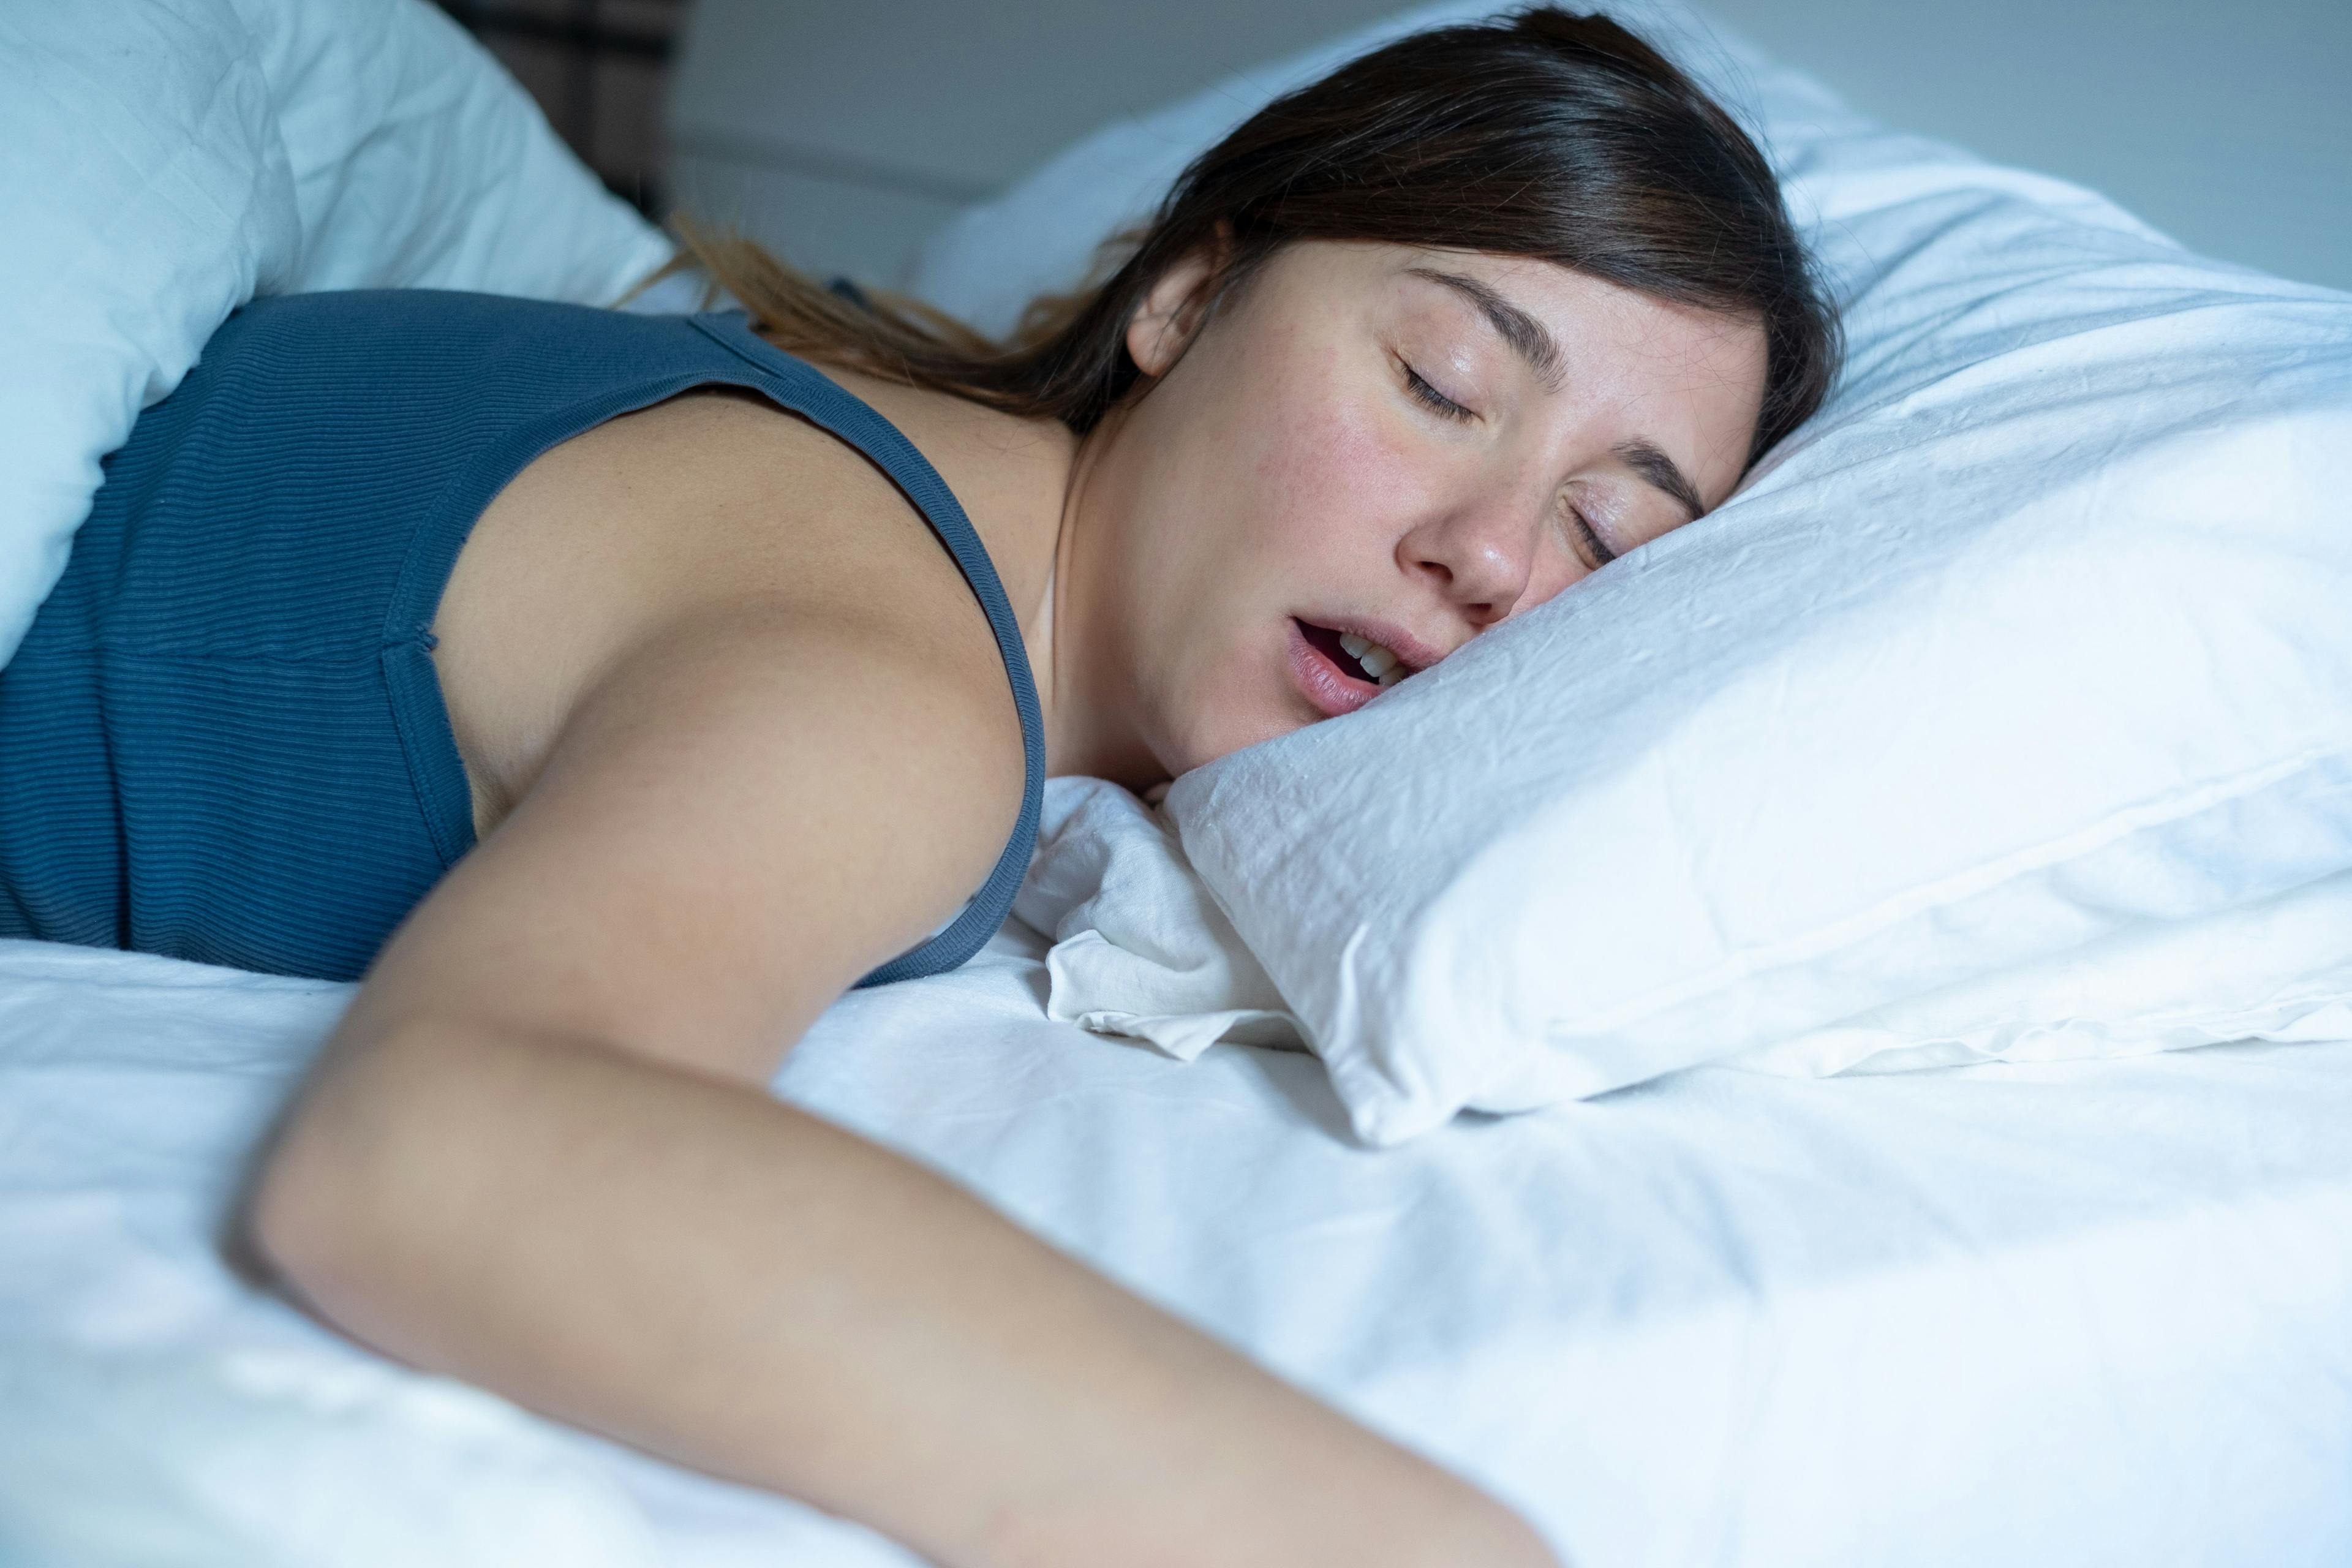 Maternal Sleep Apnea During Pregnancy May Heighten Autism Risk in Children